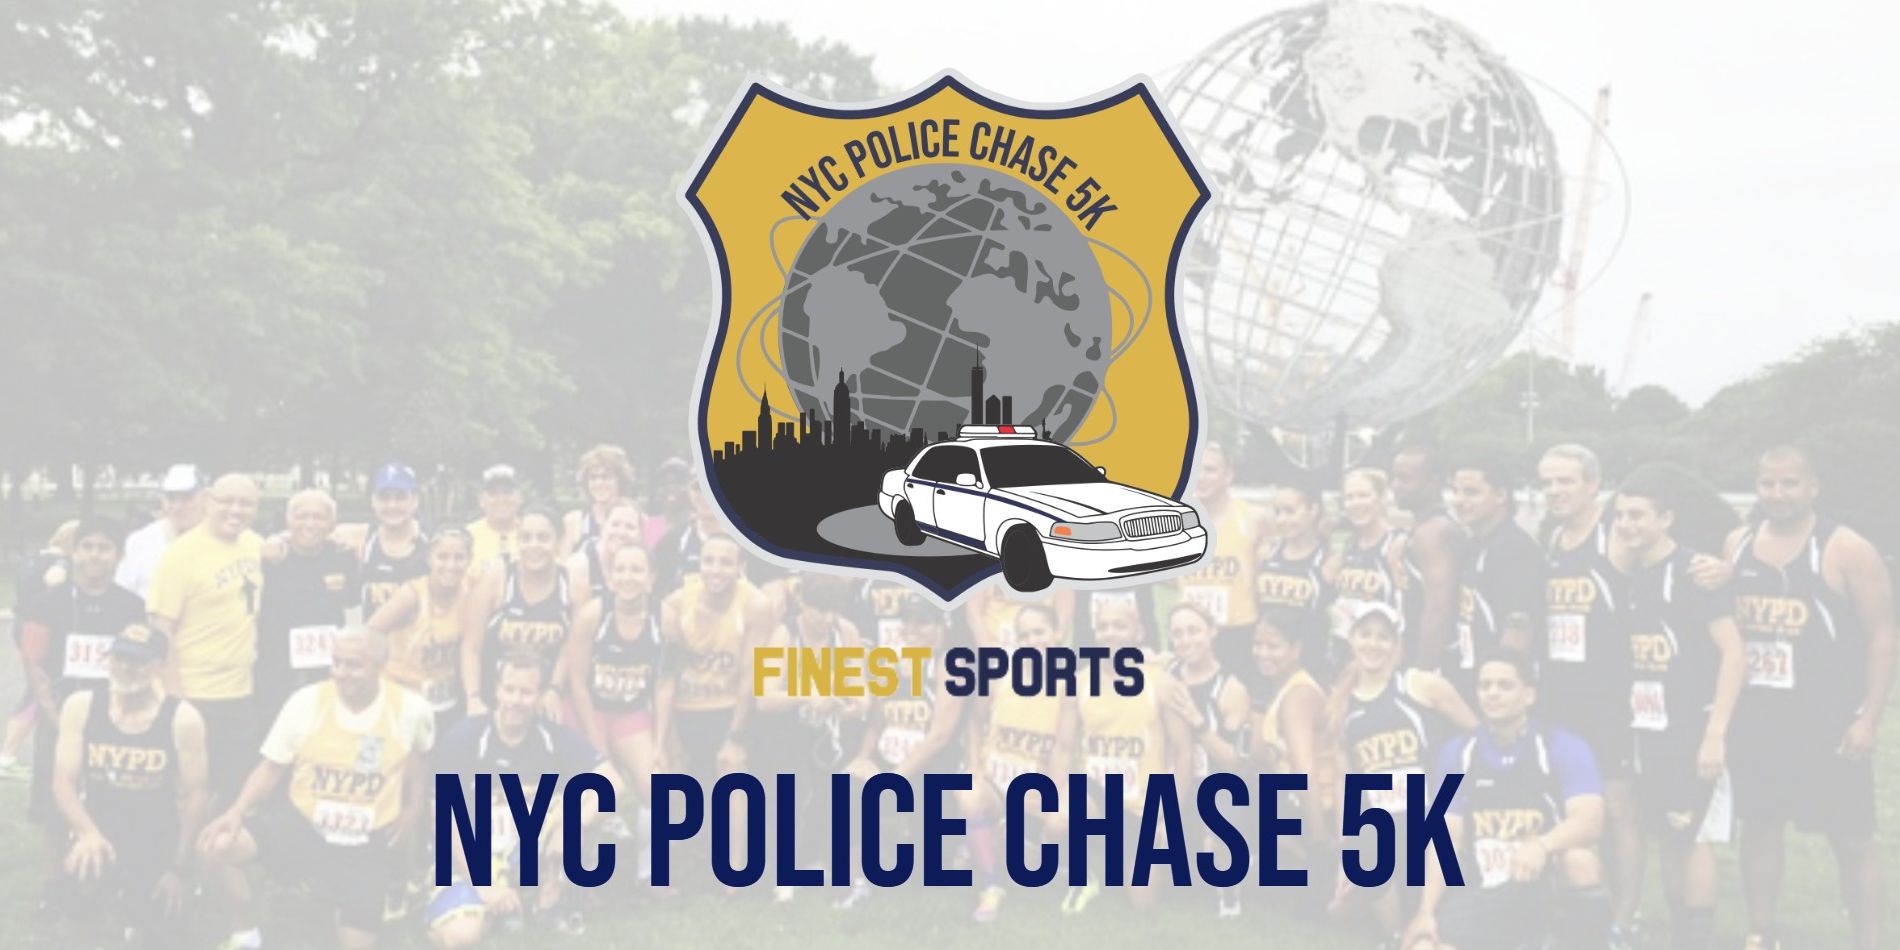 NYC Police Chase 5K Run/Walk promotional image